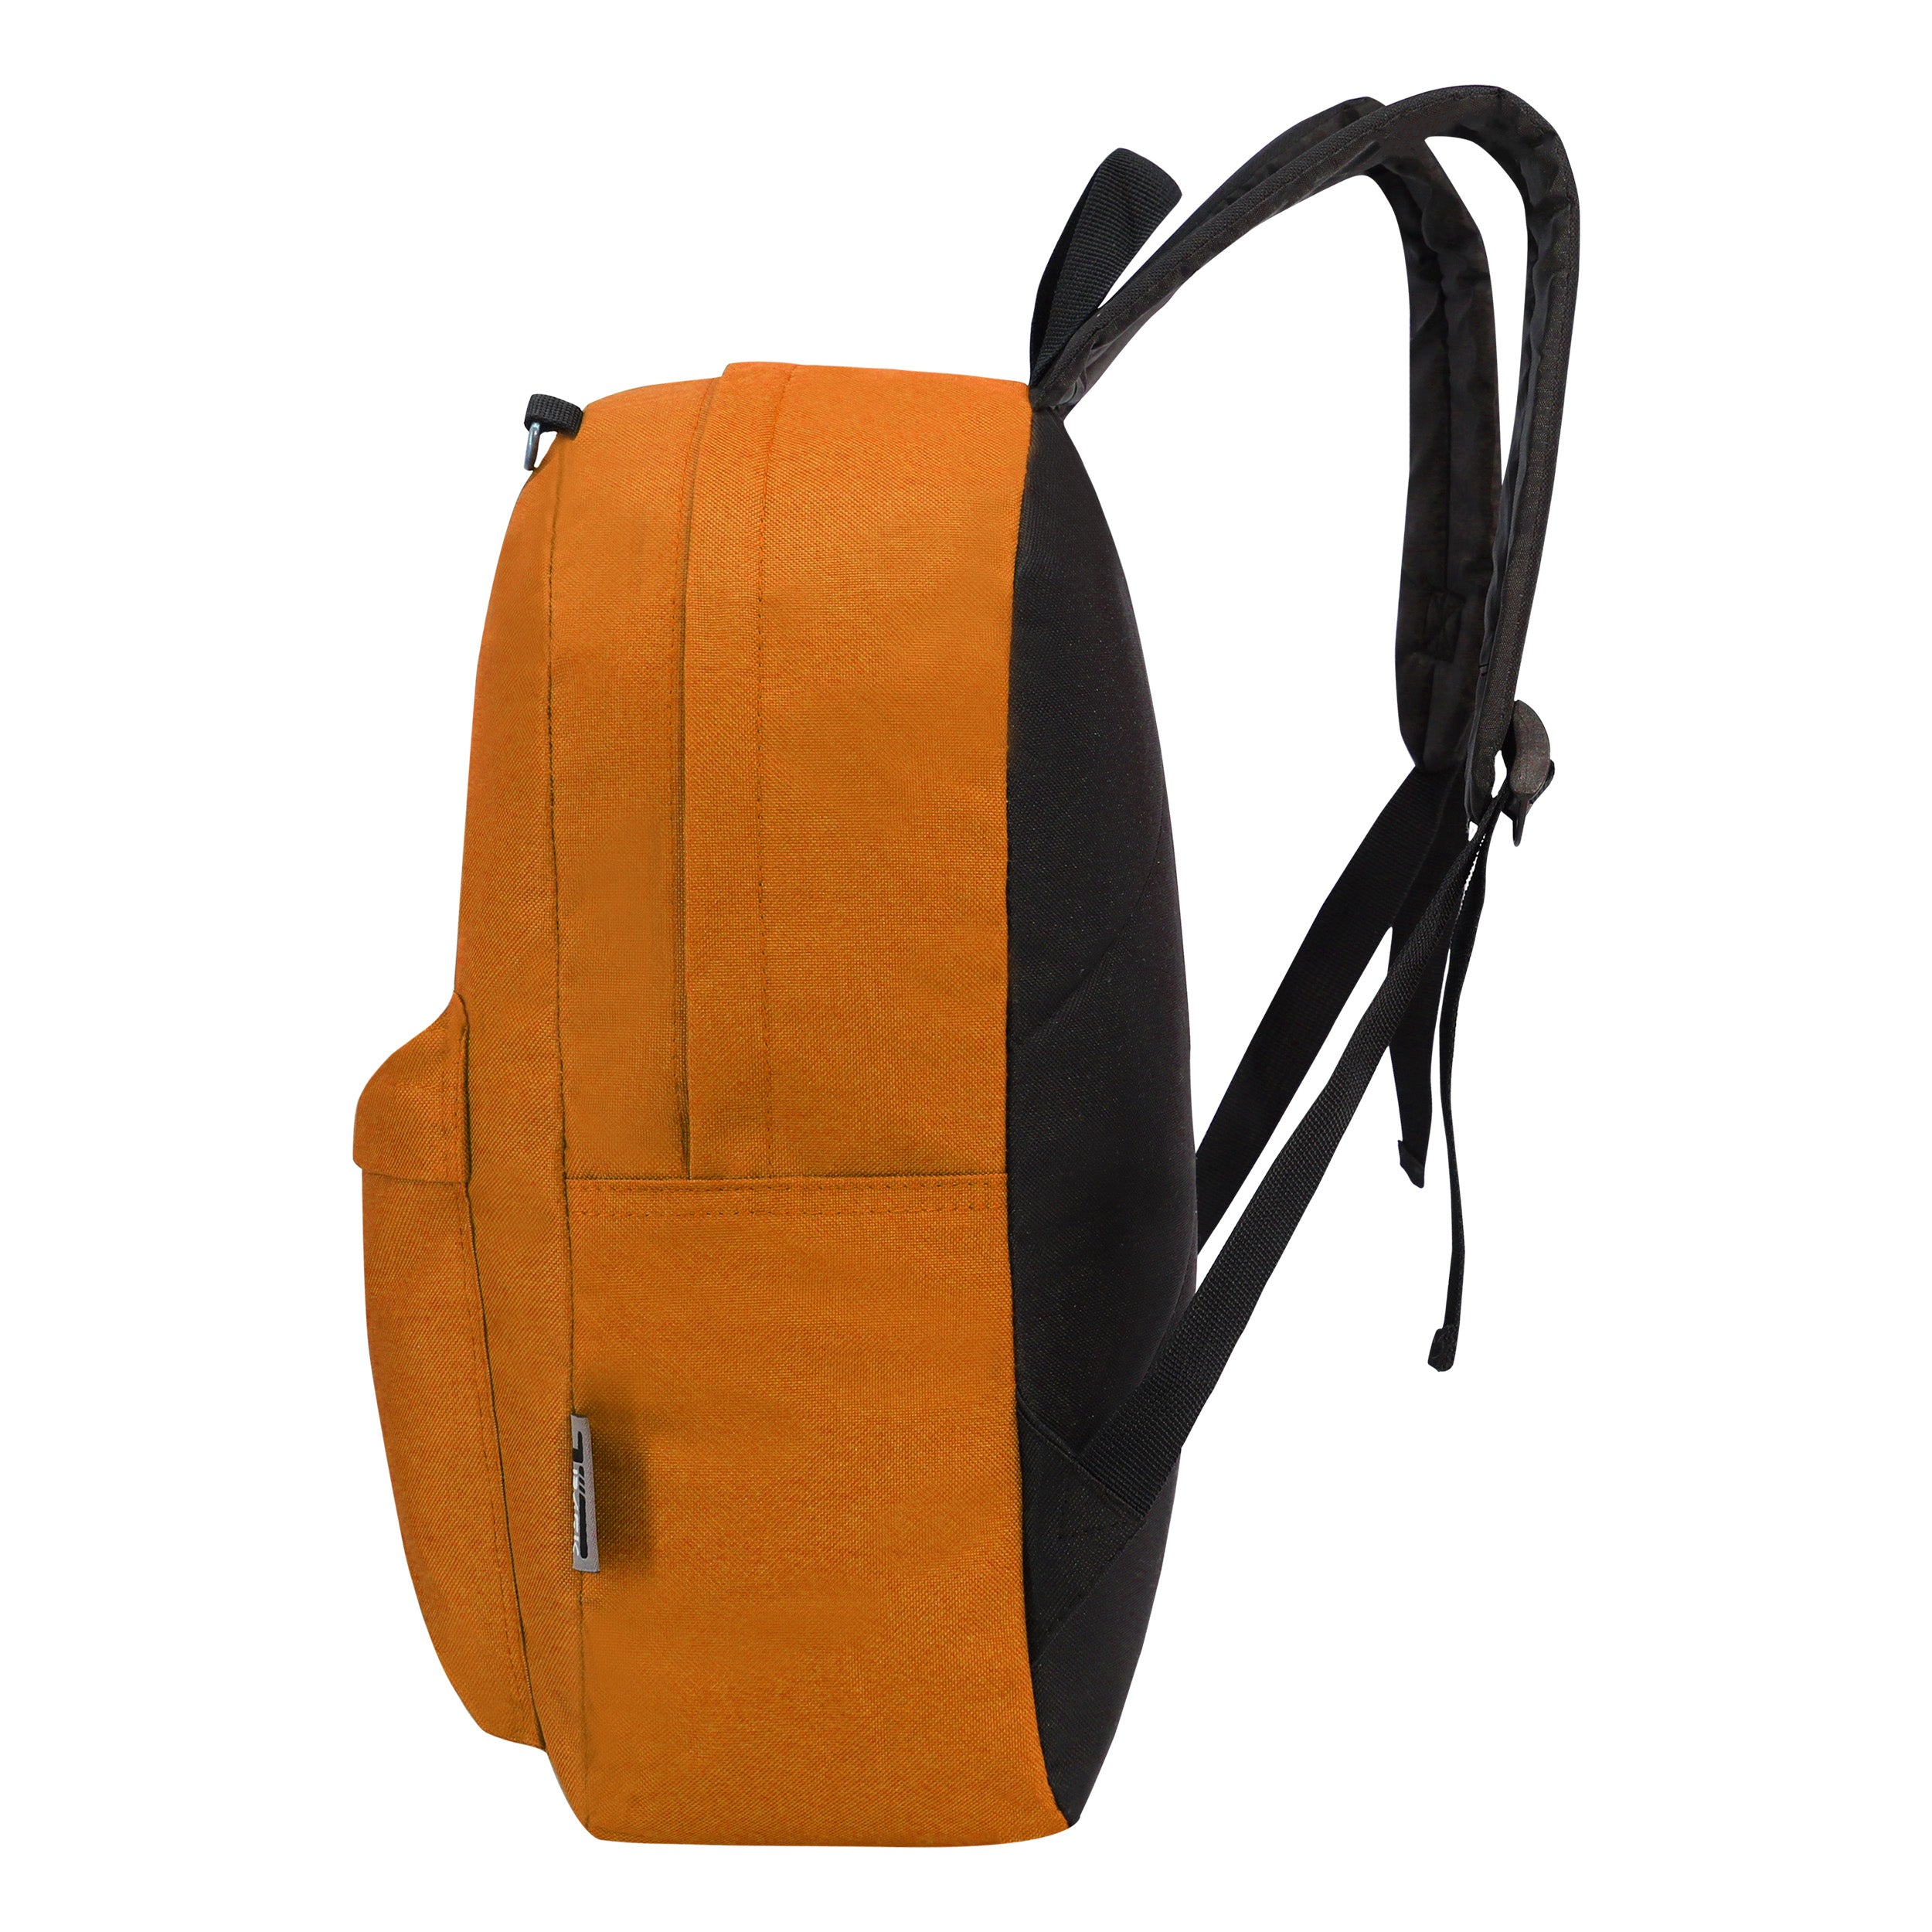 17" Bulk Classic Neon Backpack - Wholesale Case of 24 Bookbags